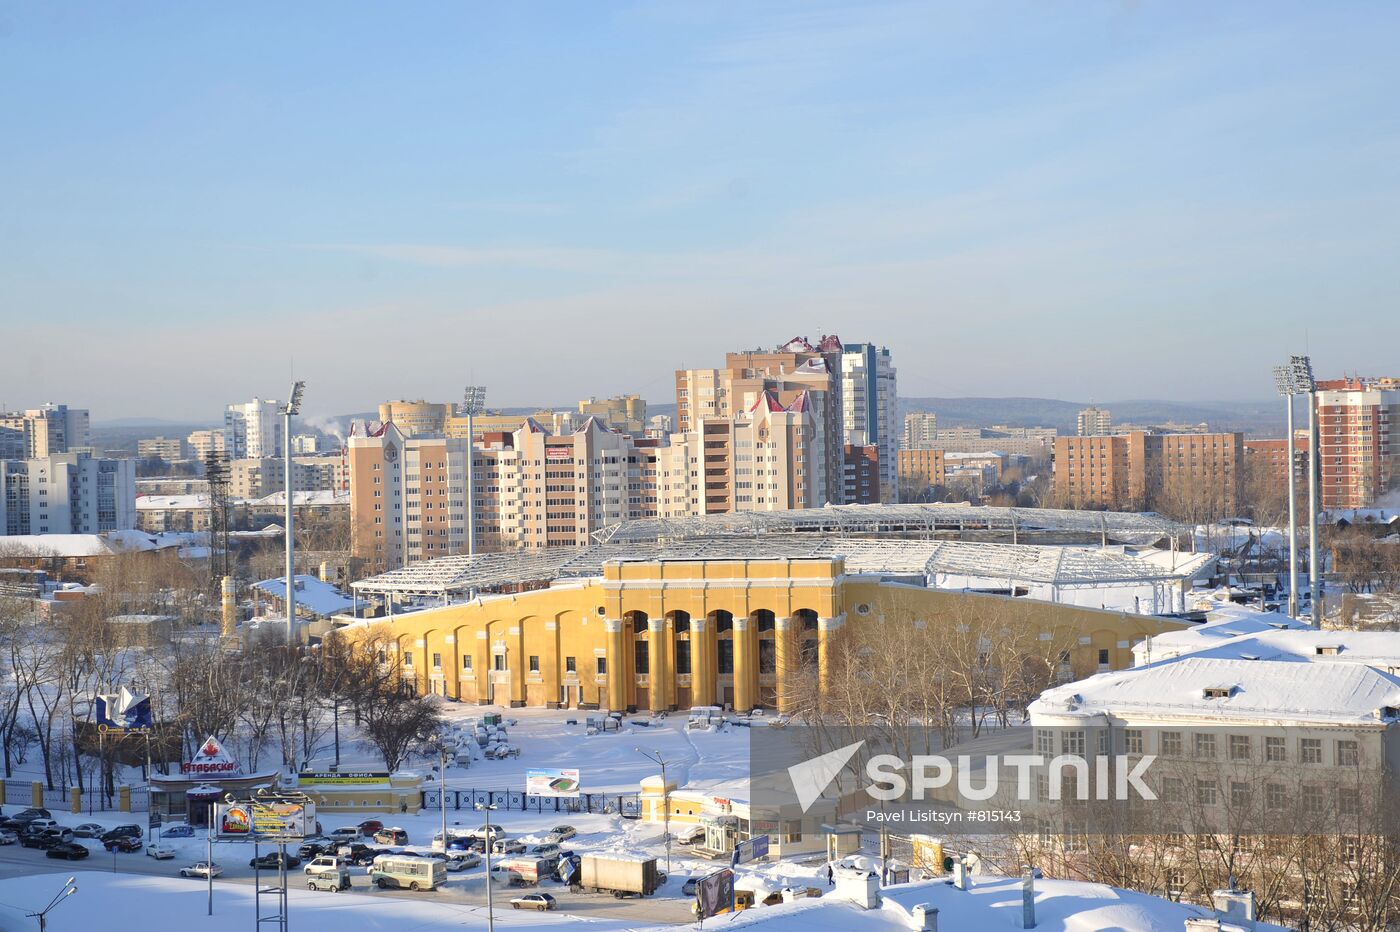 Yekaterinburg Central Stadium reconstruction